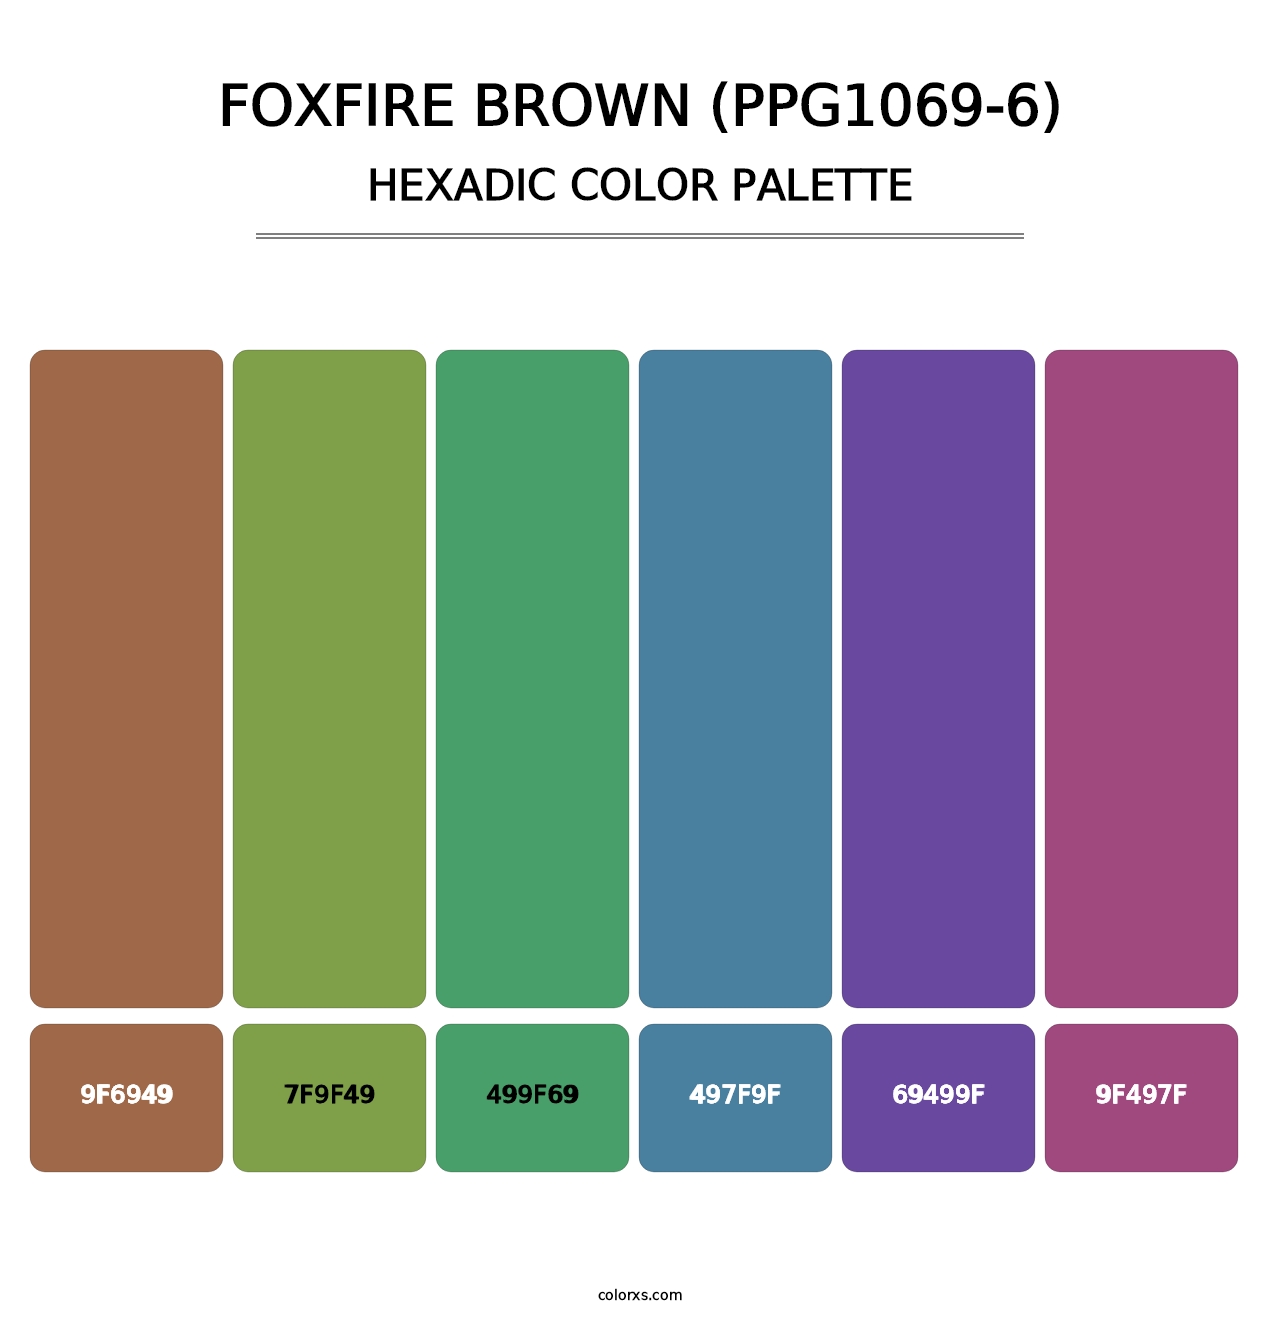 Foxfire Brown (PPG1069-6) - Hexadic Color Palette